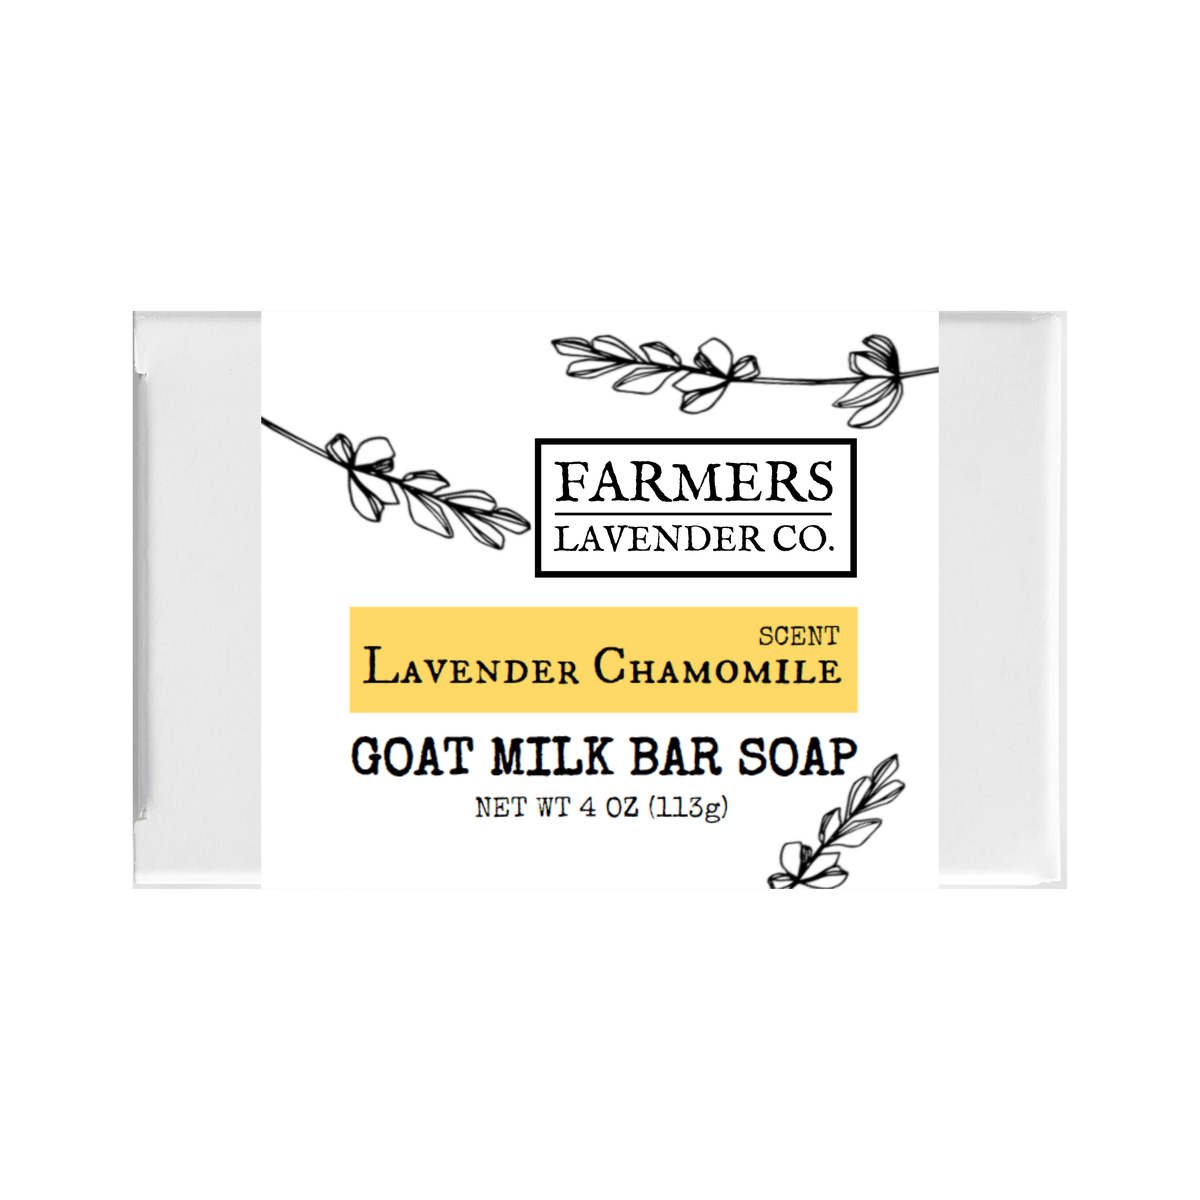 FARMERS Lavender Co. - Lavender Chamomile Goat Milk Bar Soap